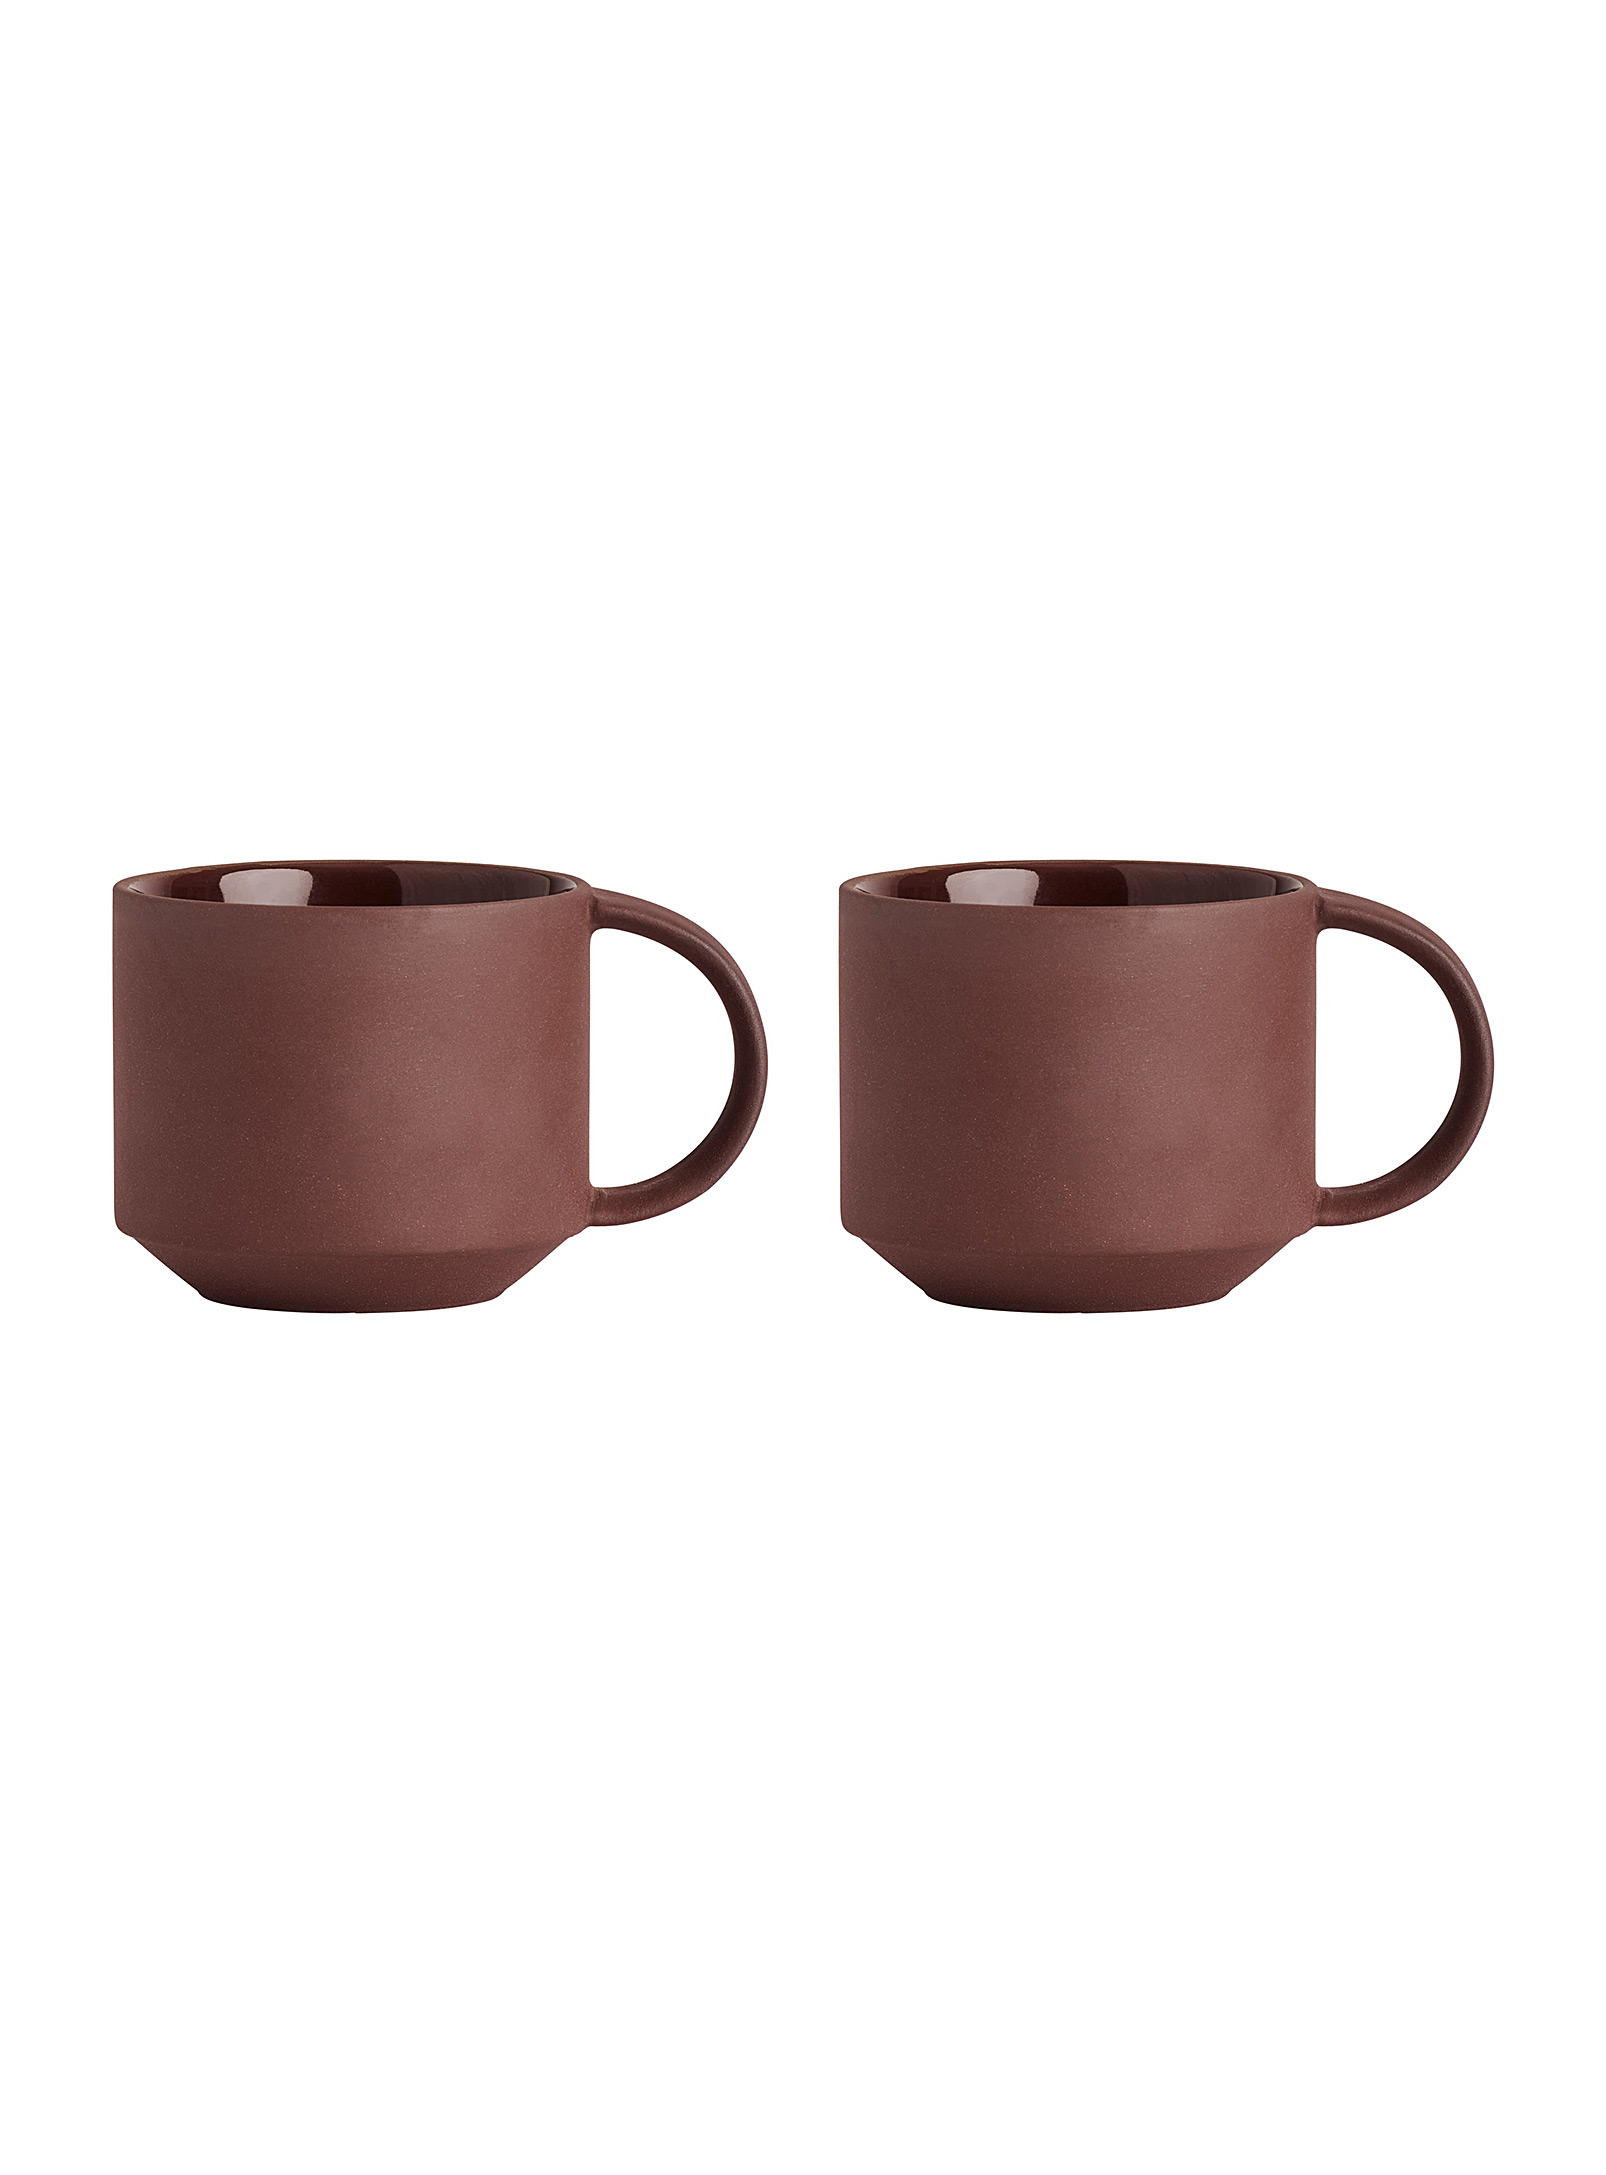 Oyoy Living Design Terracotta Geometric Artisanal Cups Set Of 2 In Dark Brown